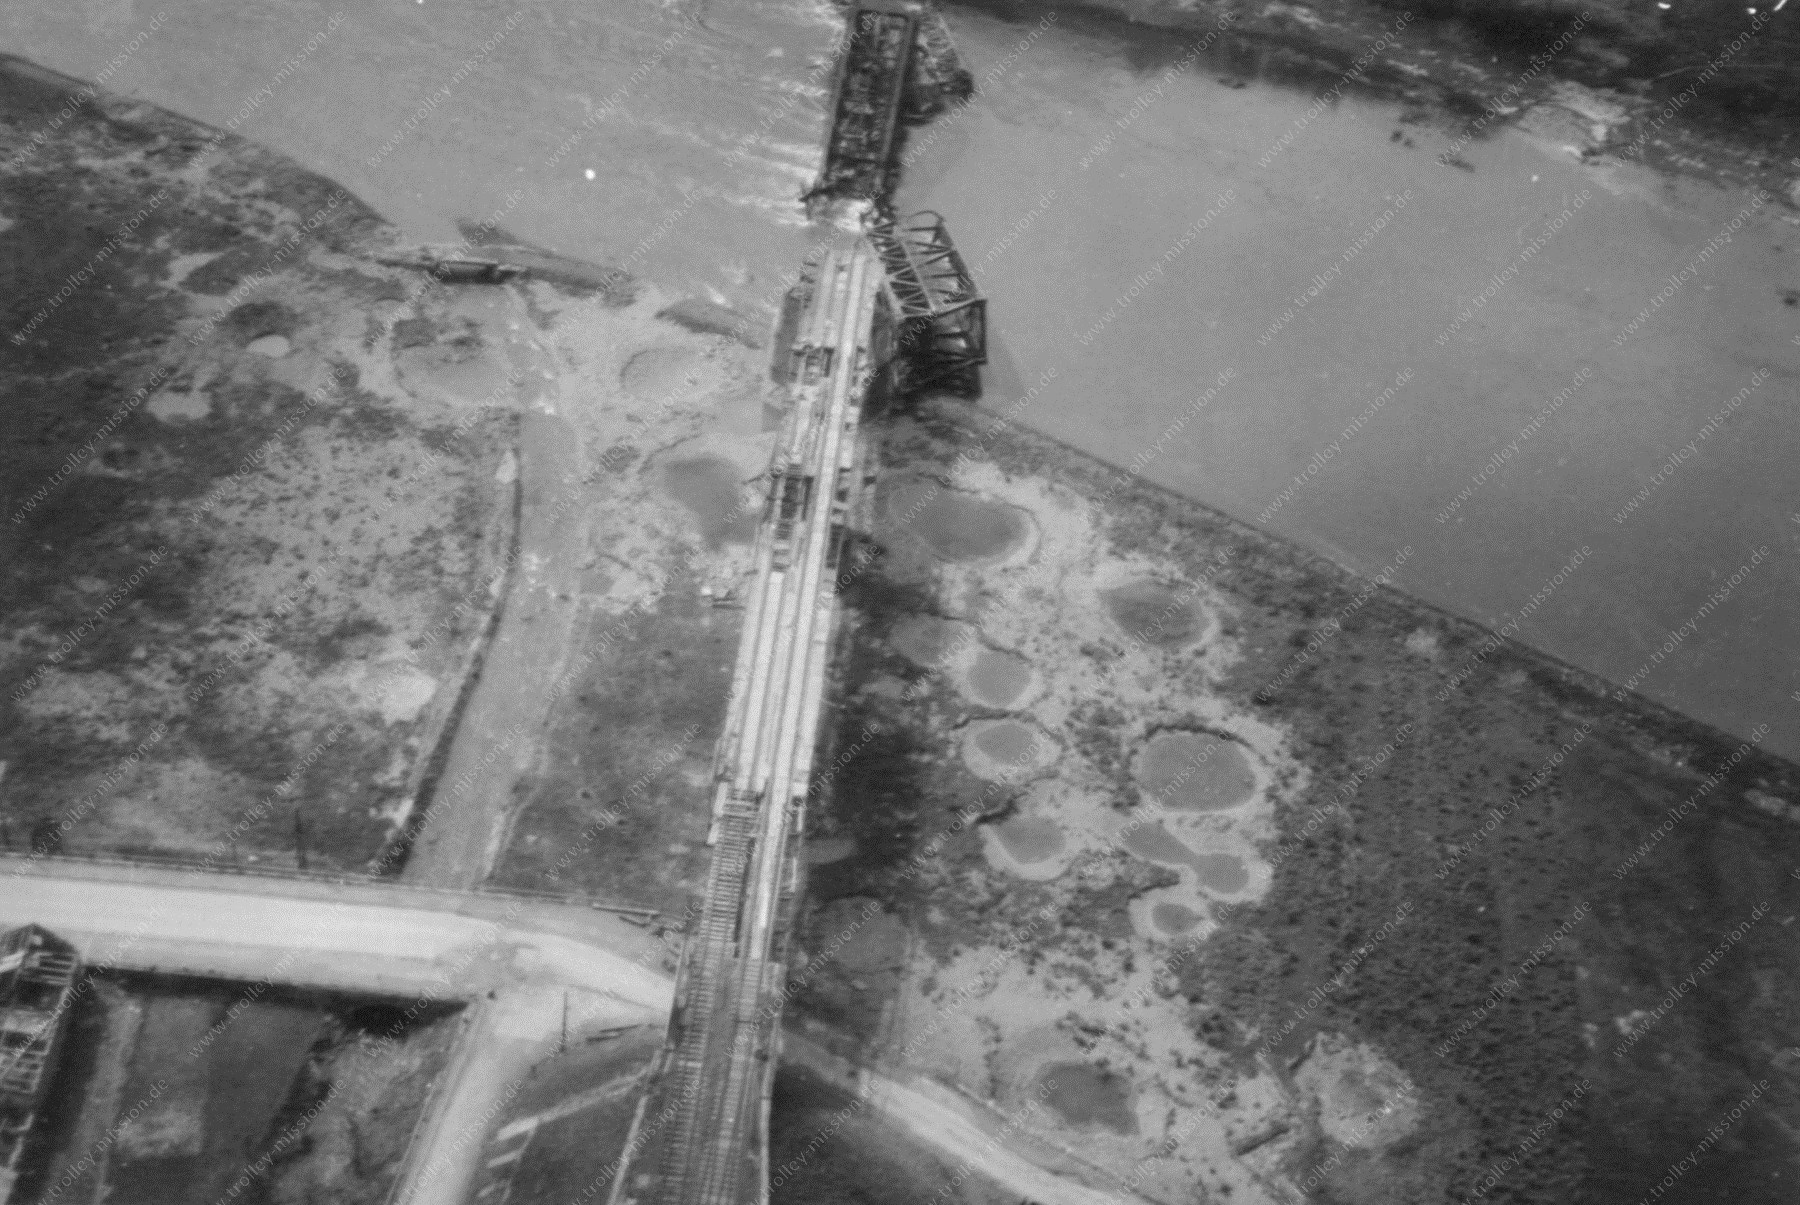 Eisenbahnbrücke Ediger-Eller an der Mosel im Zweiten Weltkrieg